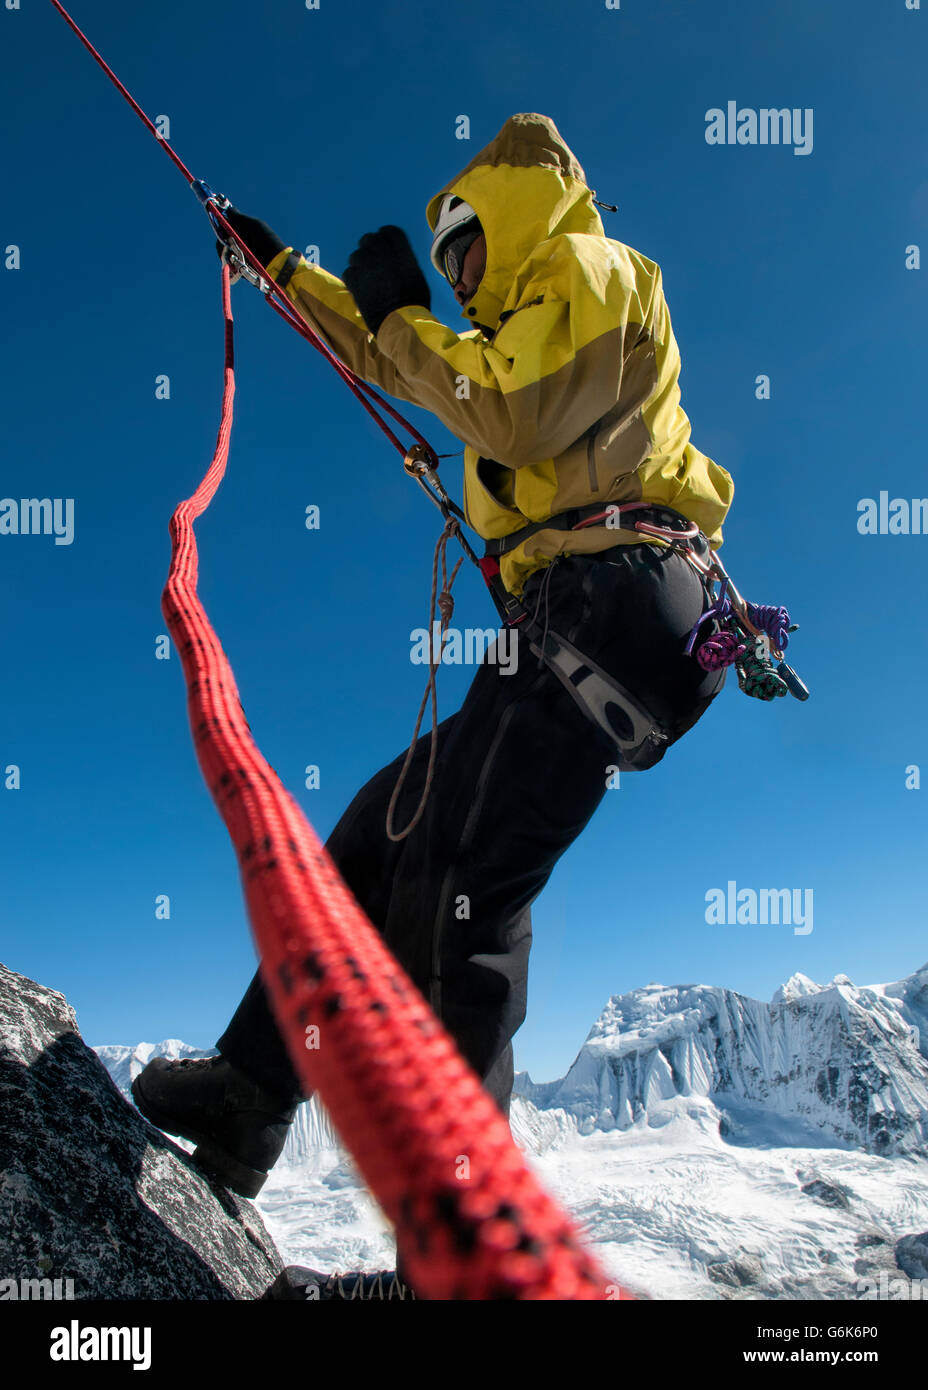 Nepal, Himalaya, Solo Khumbu, Everest Region Ama Dablam, Bergsteiger mit Seil an Felswand Stockfoto